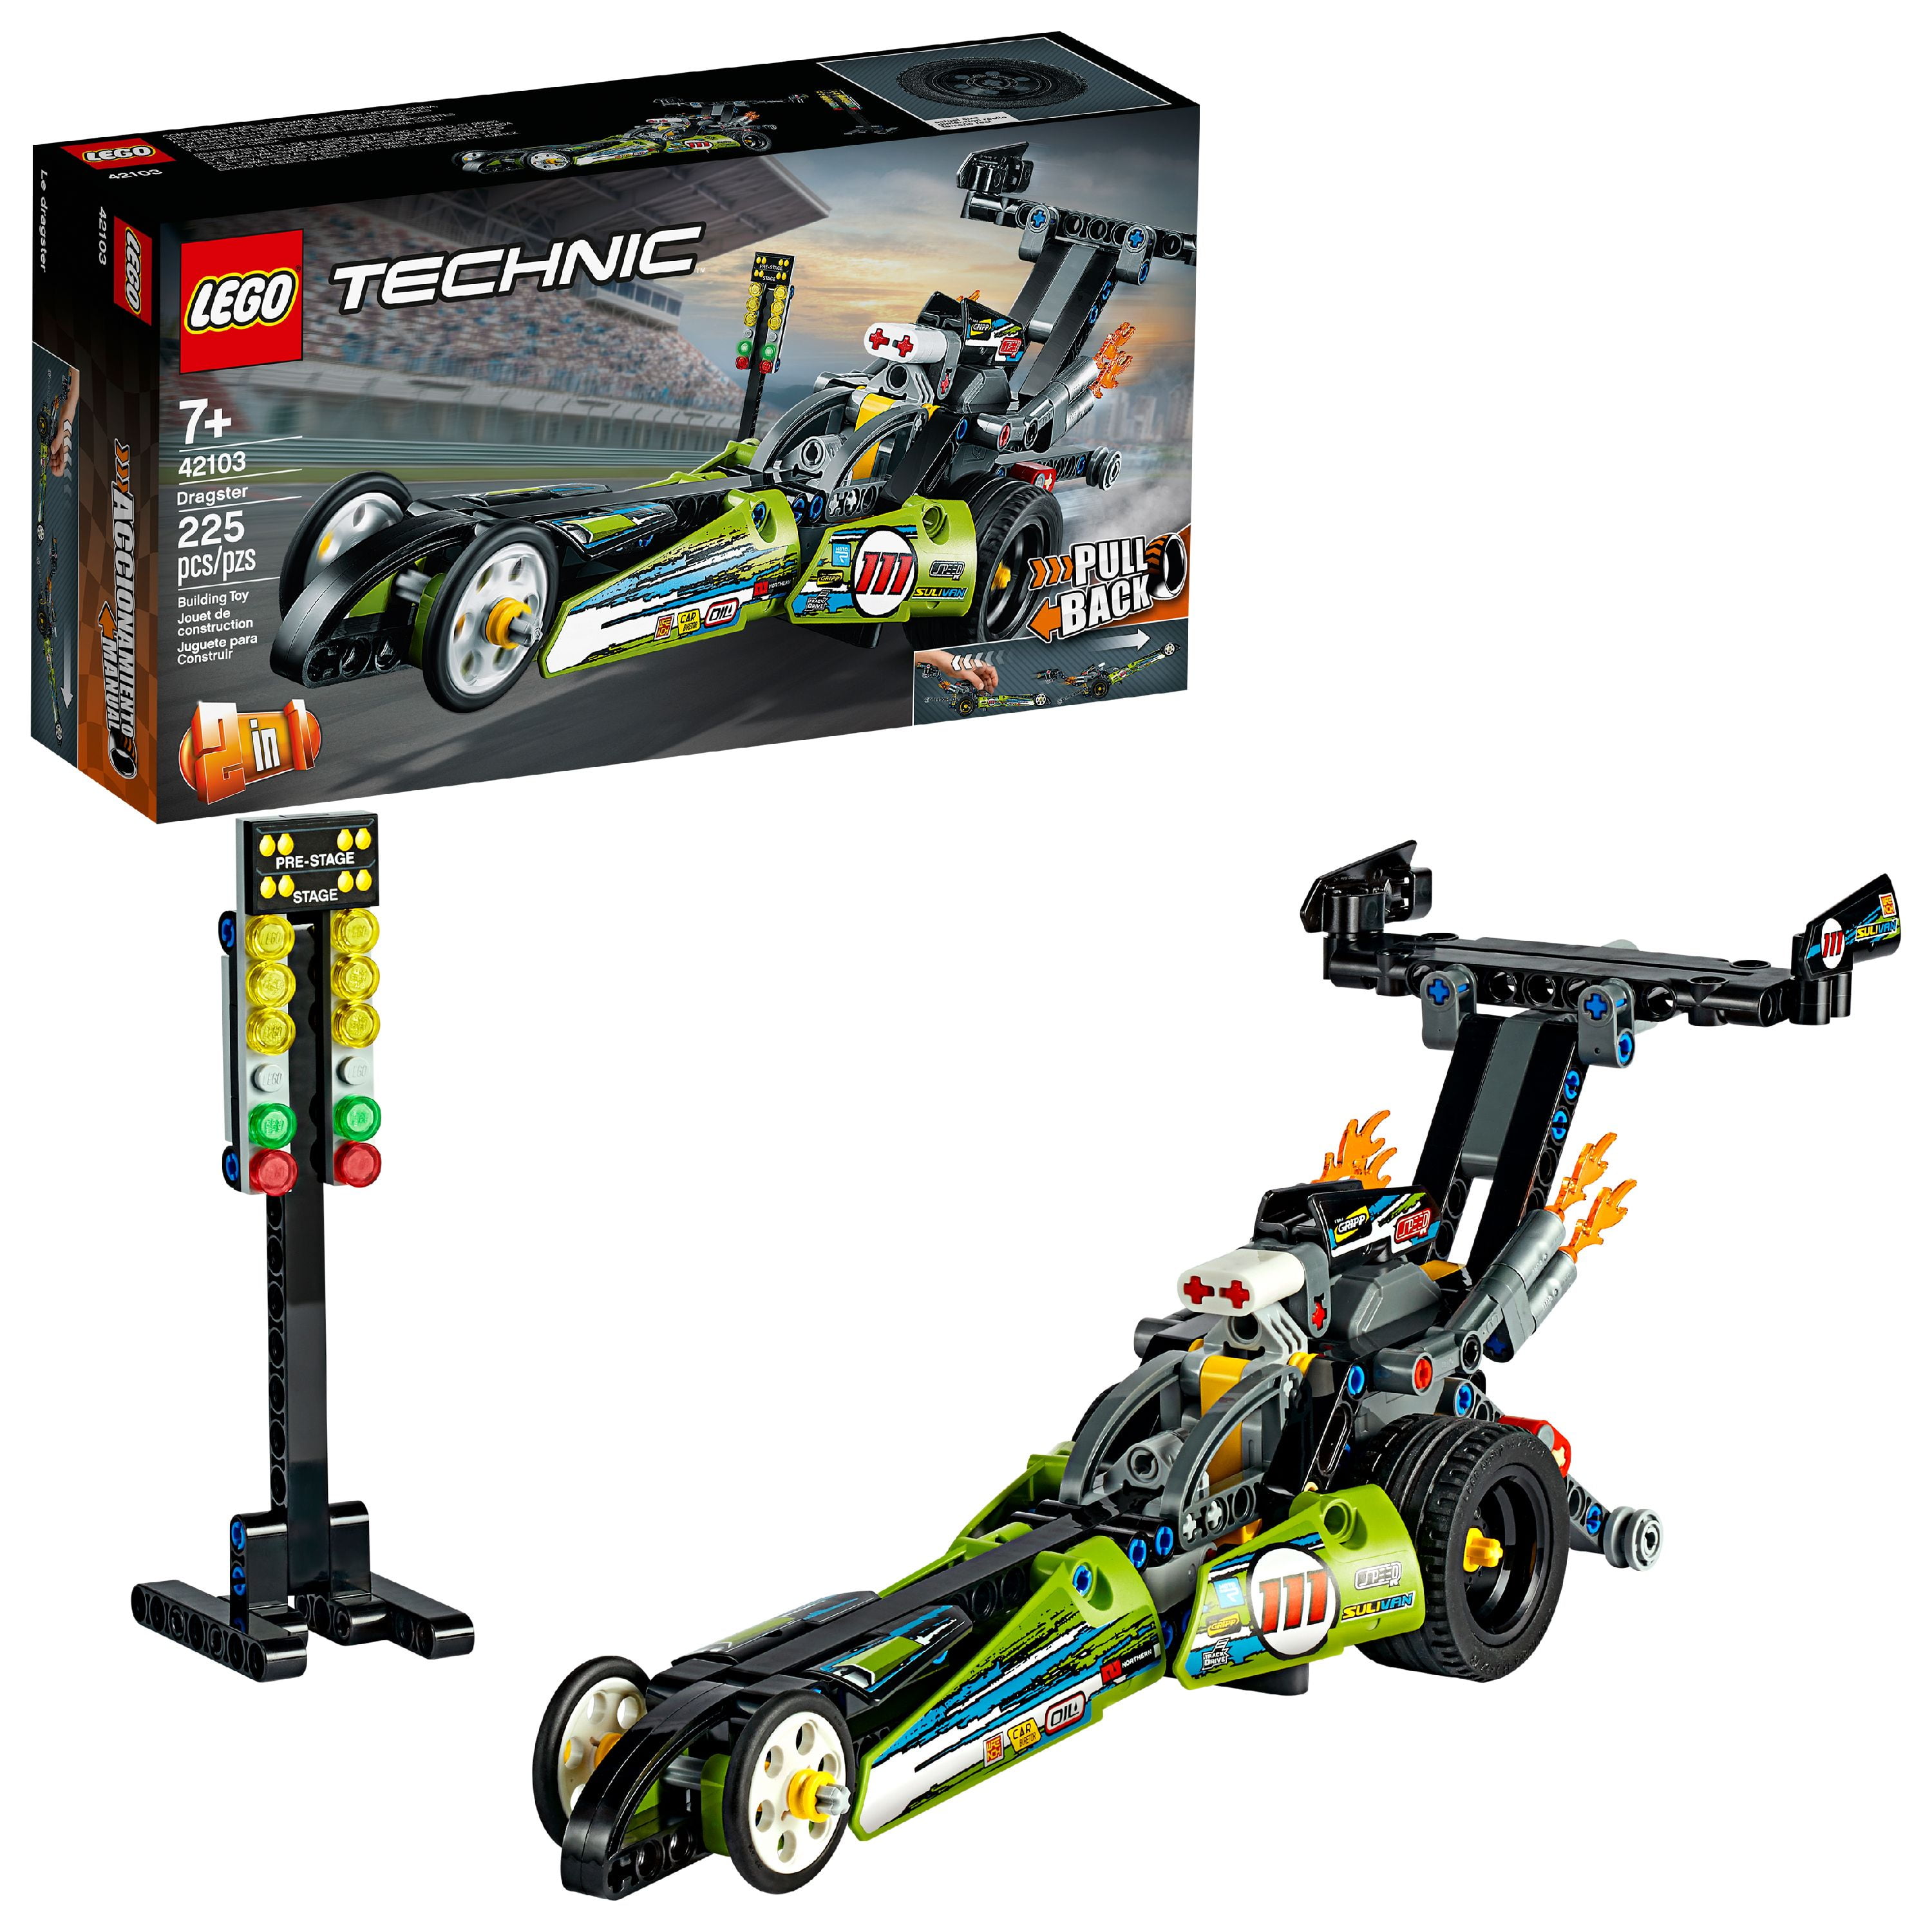 LEGO Technic 42103 Pull-Back Racing Toy Building (225 - Walmart.com